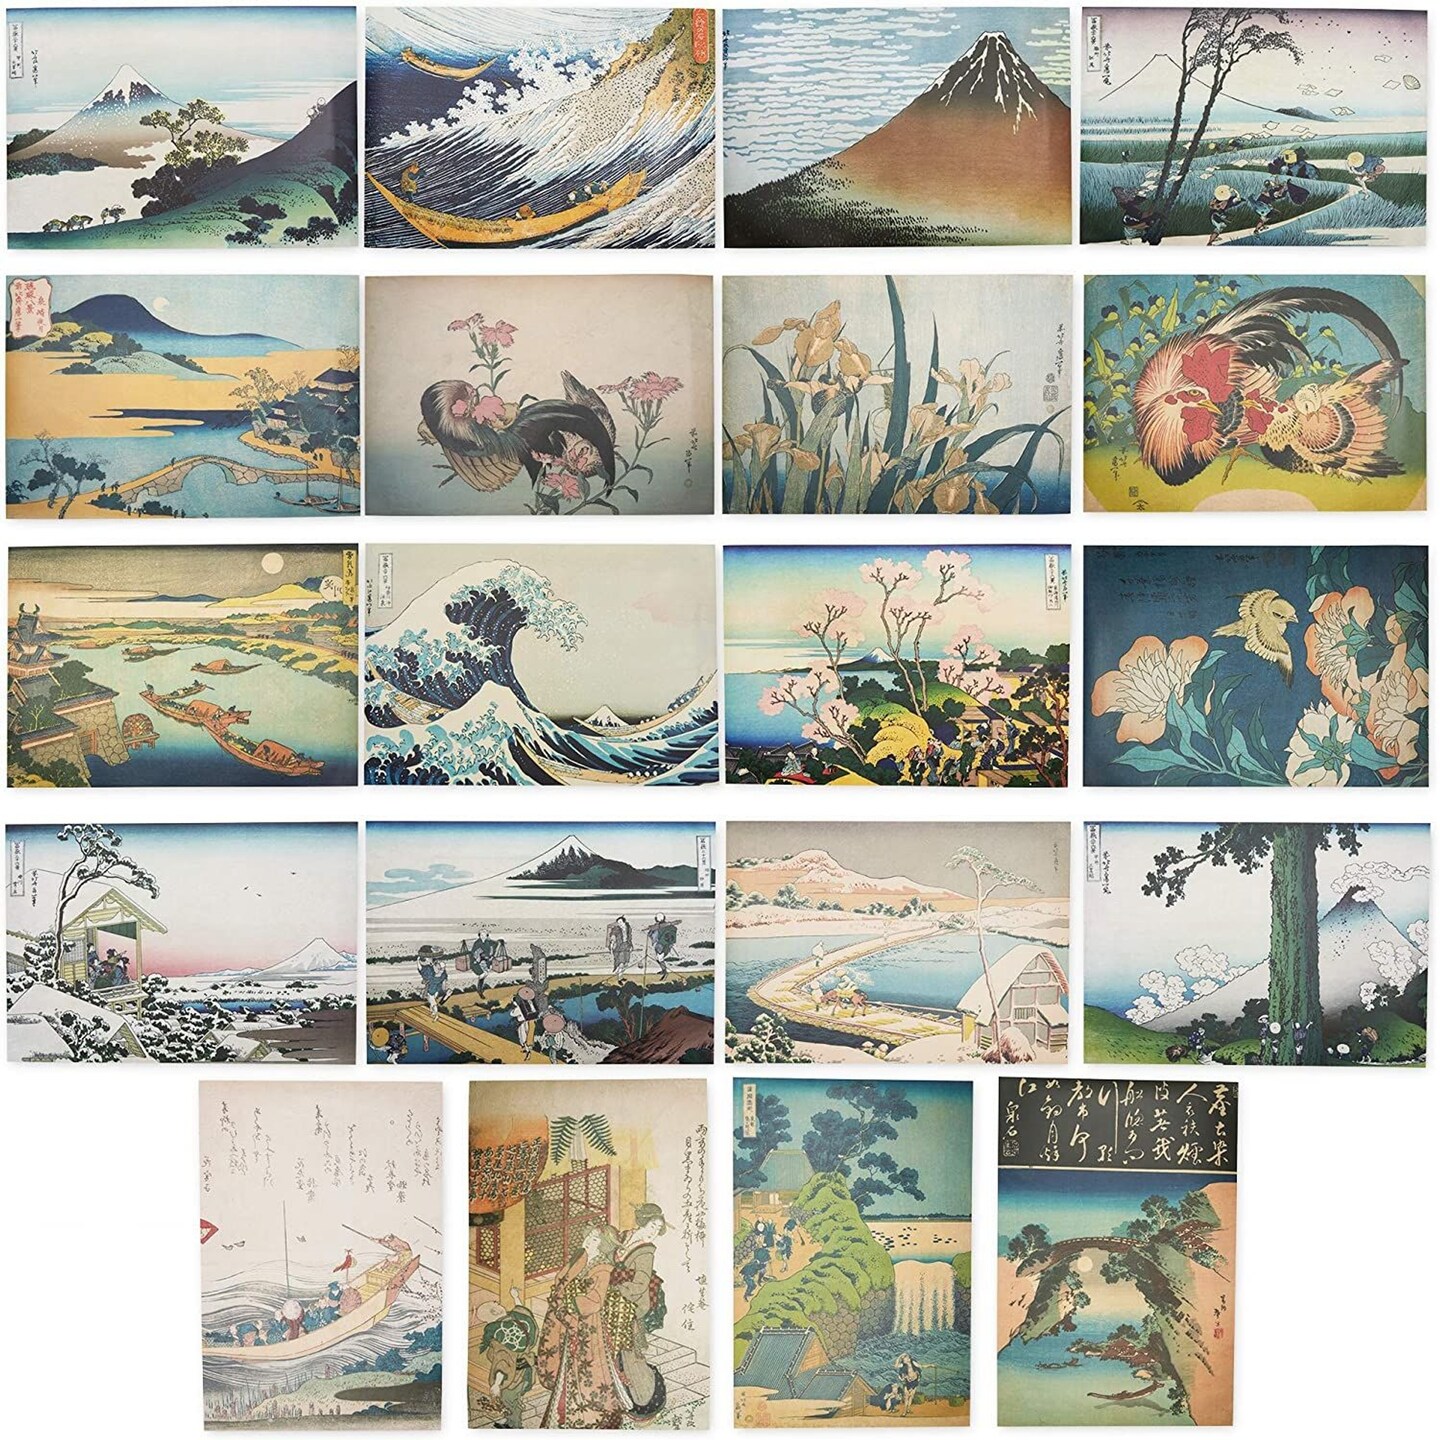 Katsushika Hokusai Posters (13 x 19 In, 20 Pack)